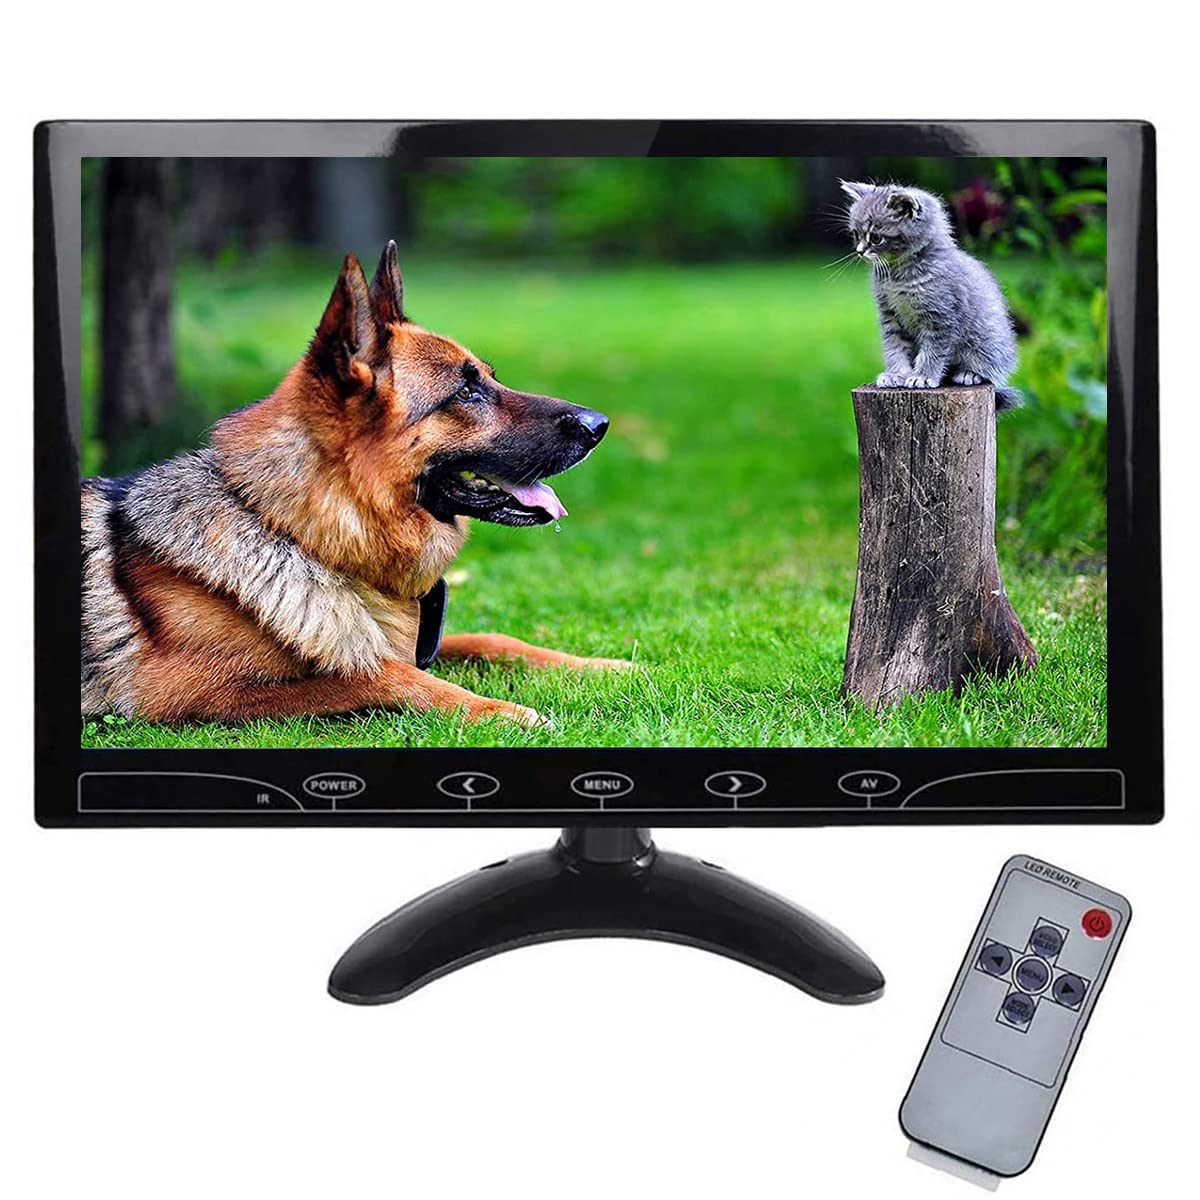 ESoku 10.1" Inch Small CCTV Monitor - HD 1024x600 Portable Display LCD Color Monitors Screen with HDMI AV VGA Port Remote Control Built-in Spea...